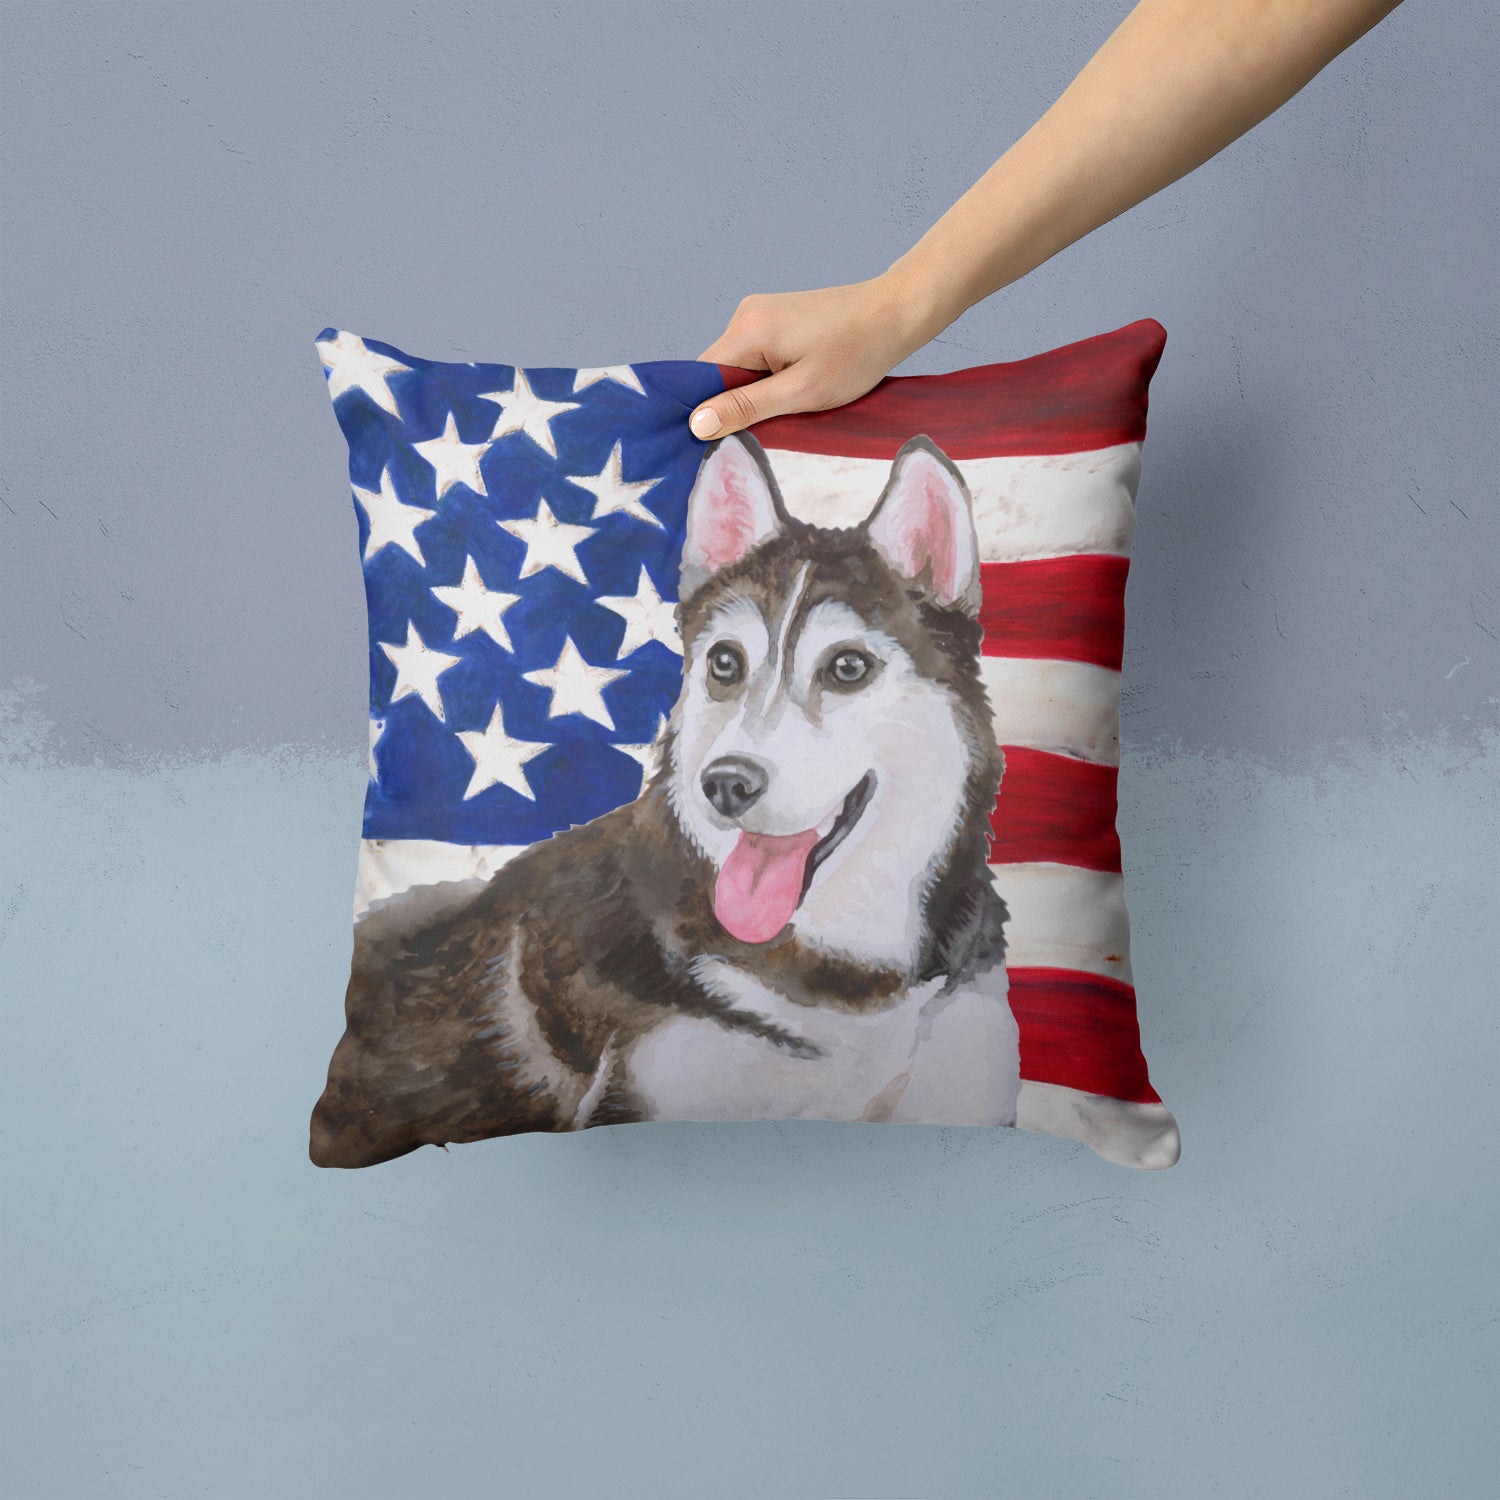 Siberian Husky #2 Patriotic Fabric Decorative Pillow BB9712PW1414 - the-store.com